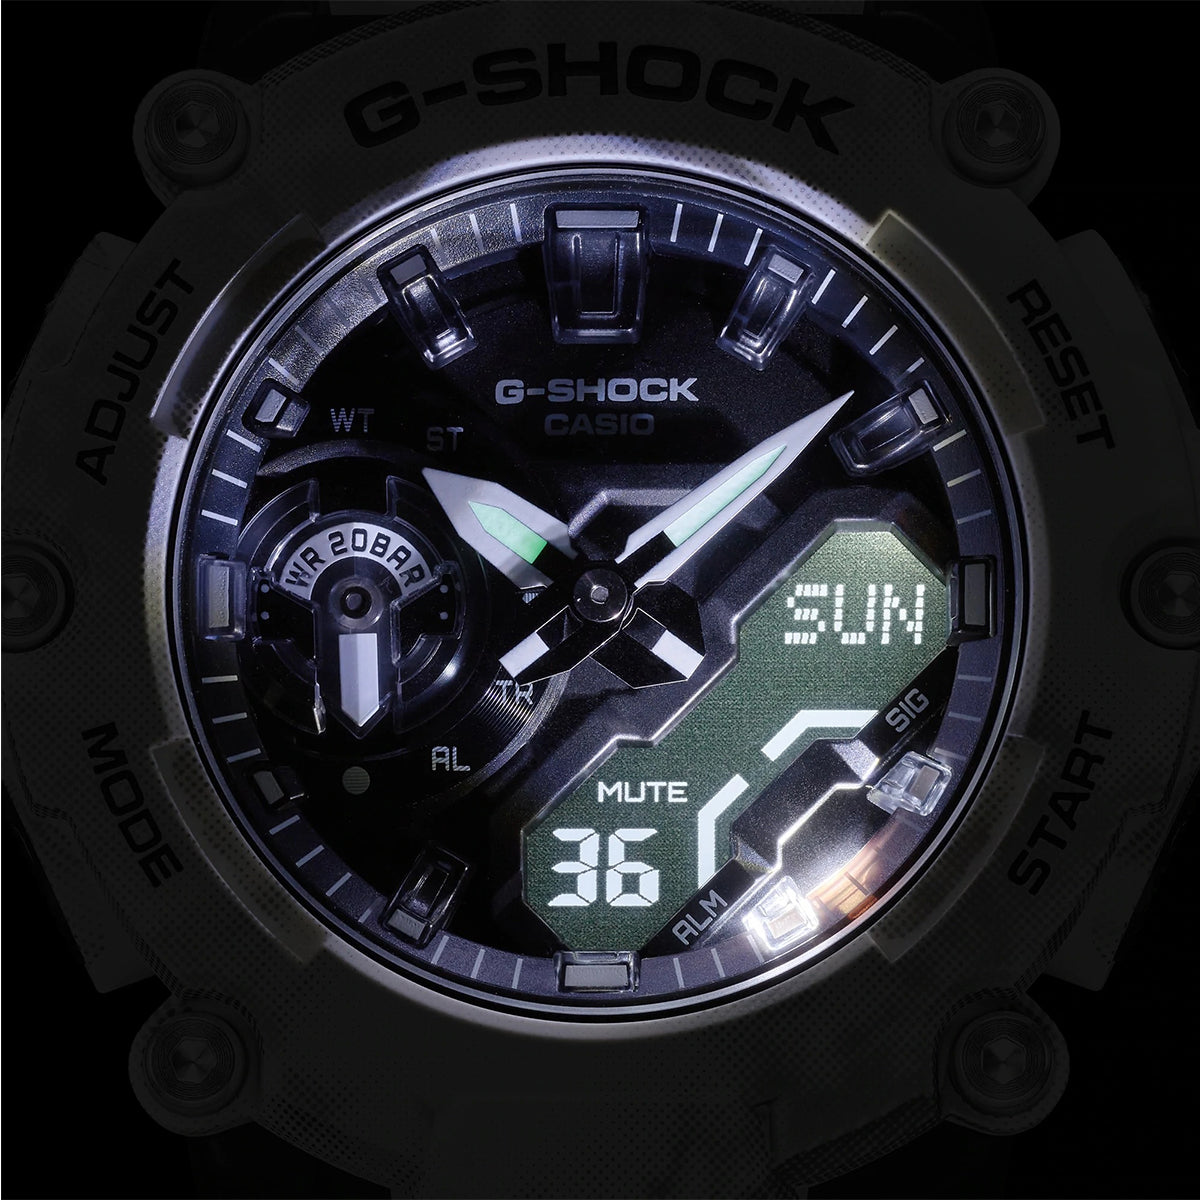 Casio - G-Shock - GA-2200GC-7ADR